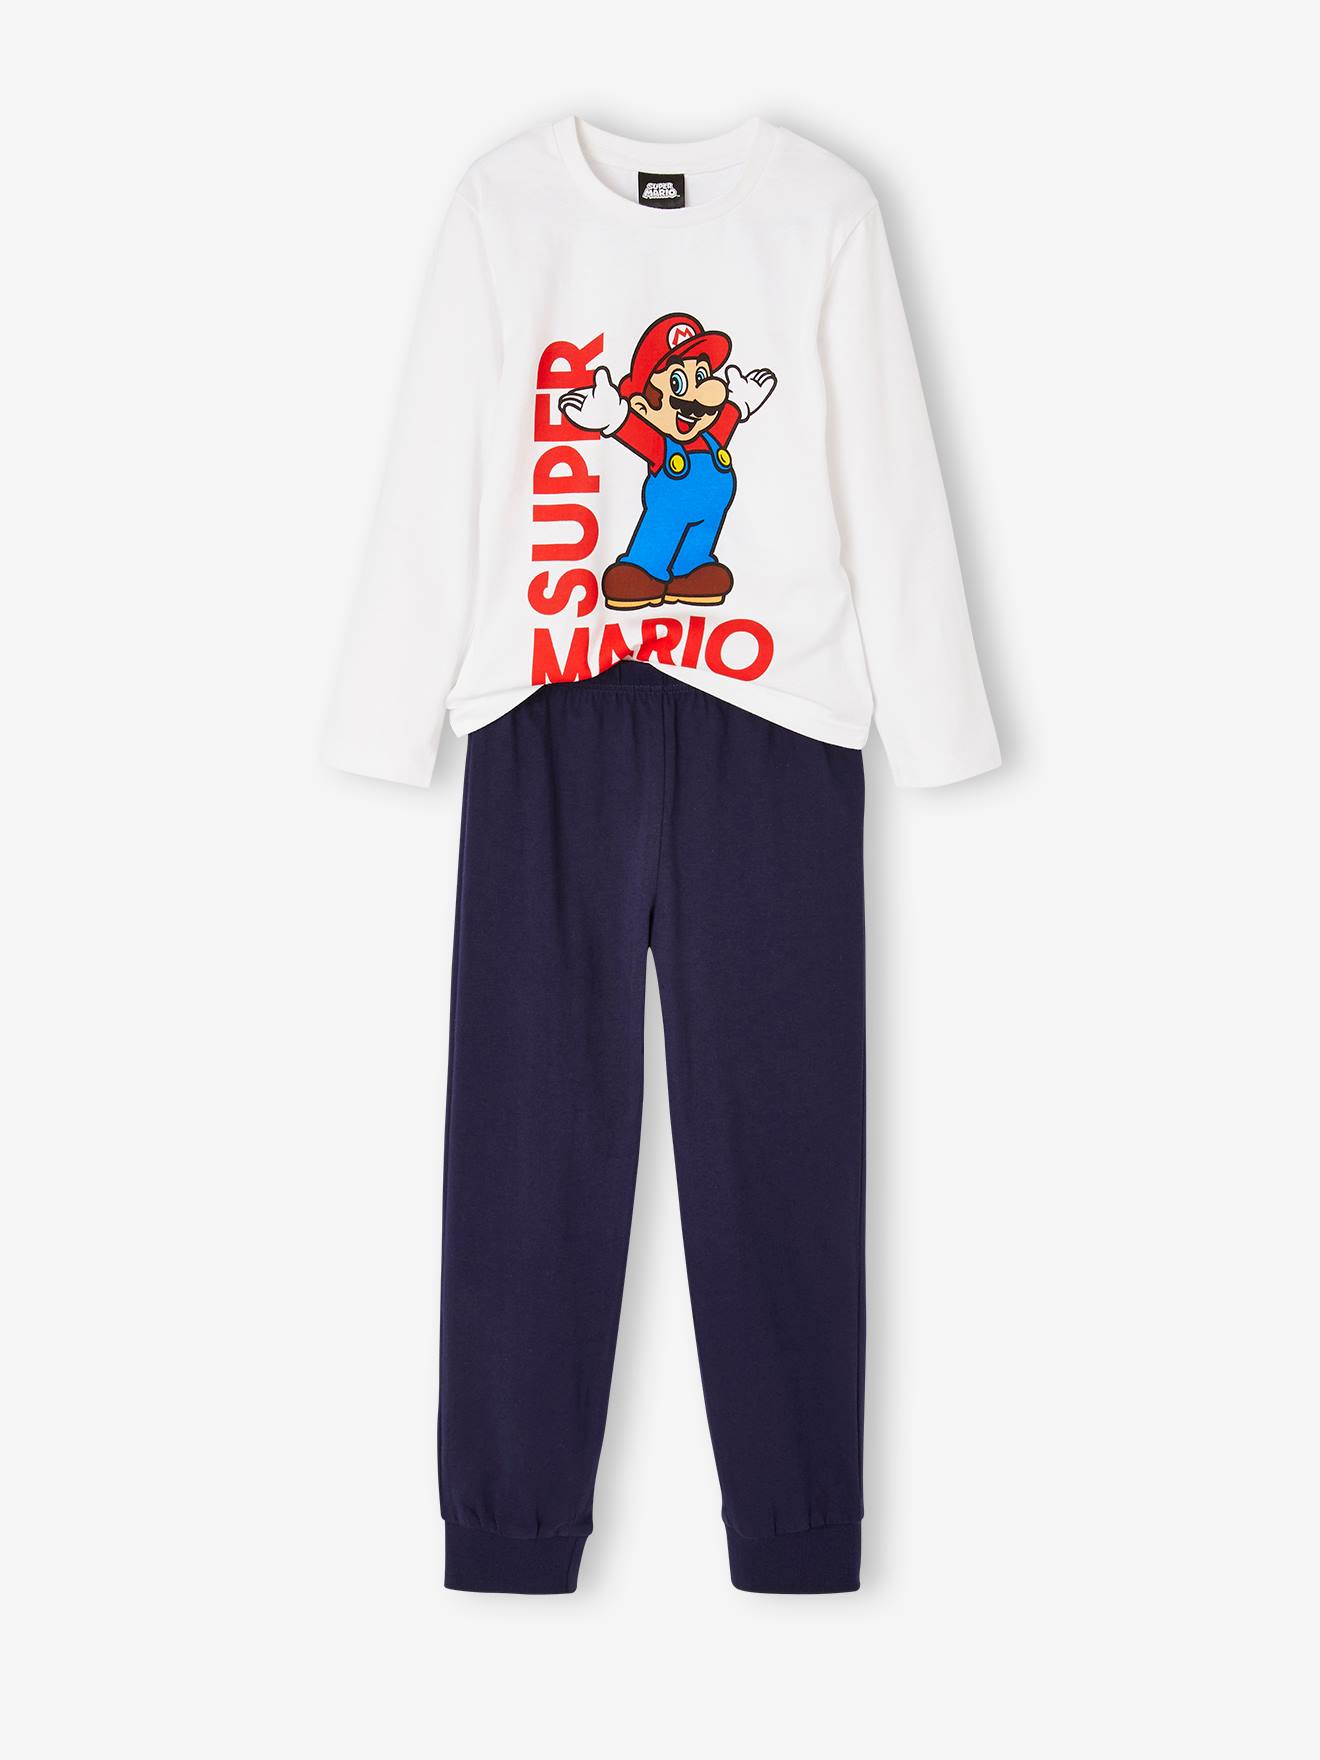 Pyjamas for Boys, Super Mario(r) navy blue